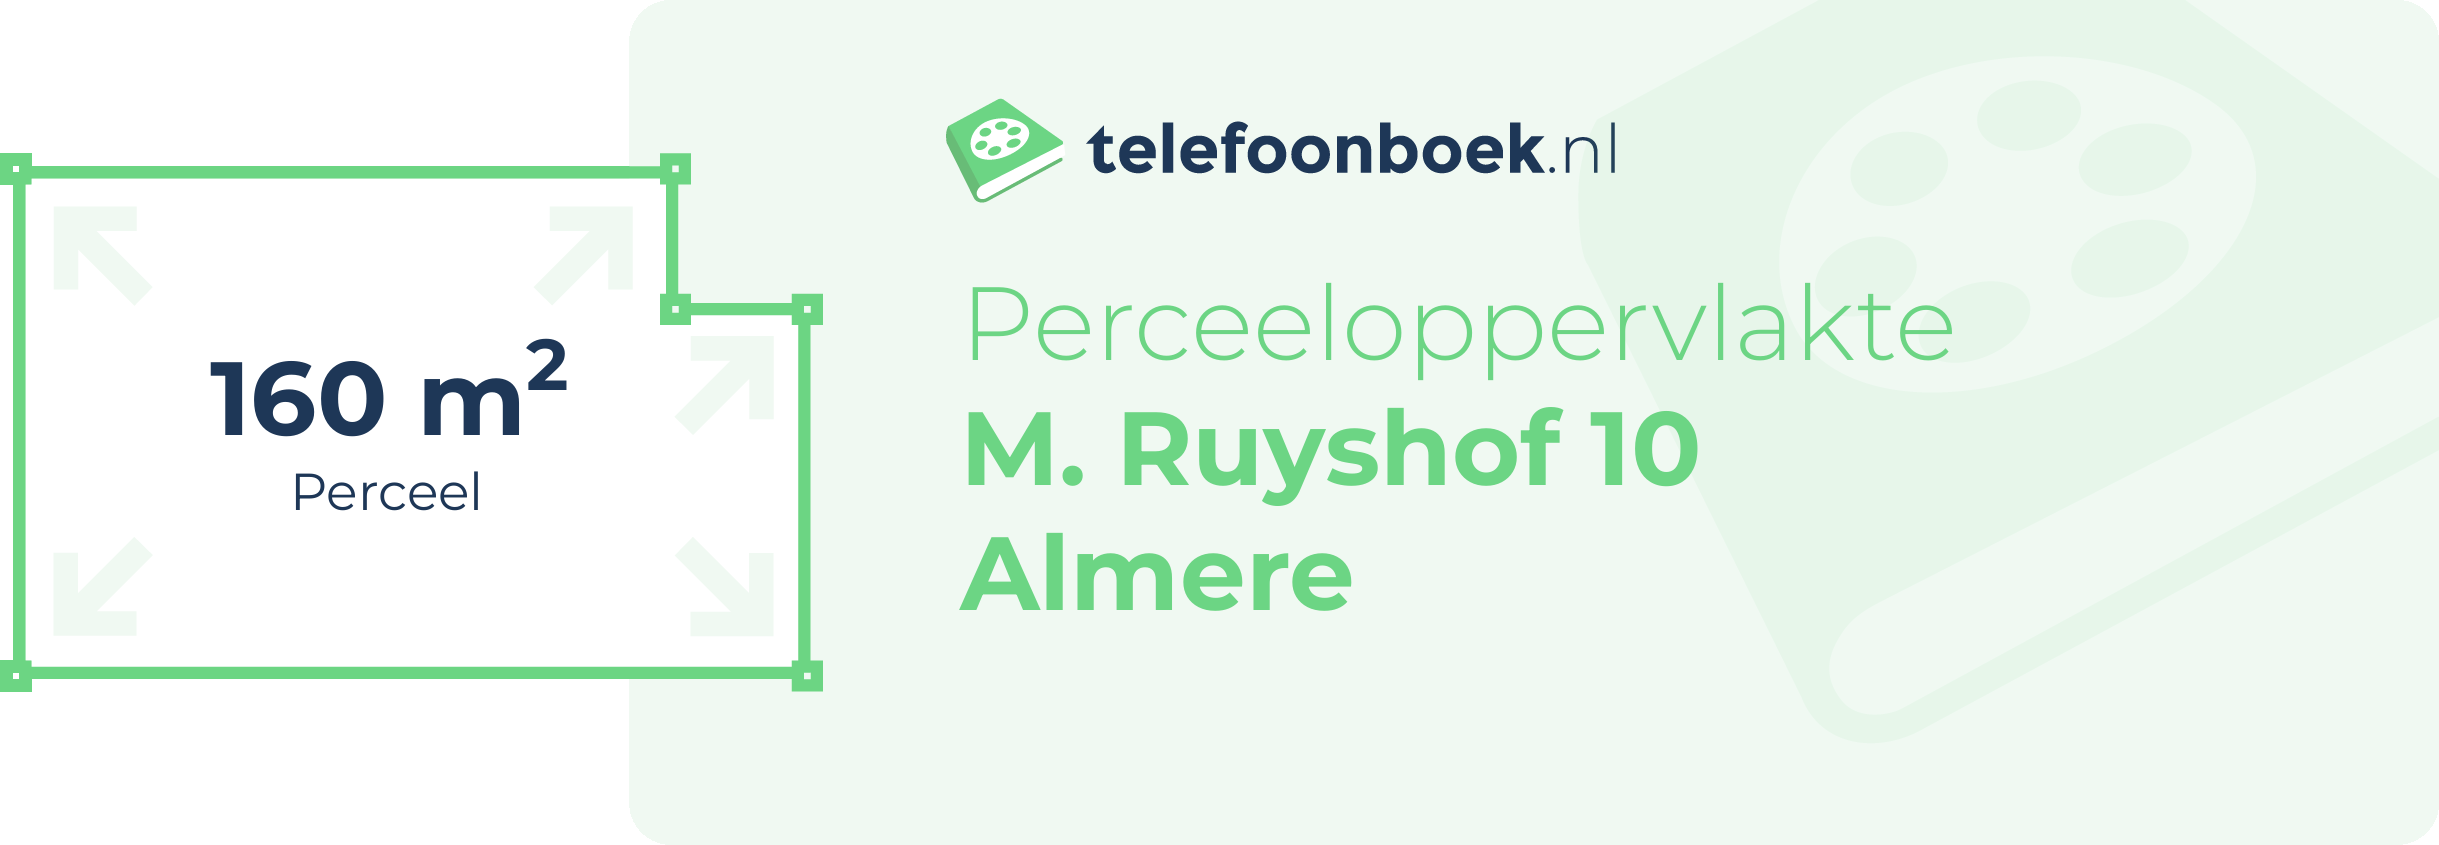 Perceeloppervlakte M. Ruyshof 10 Almere